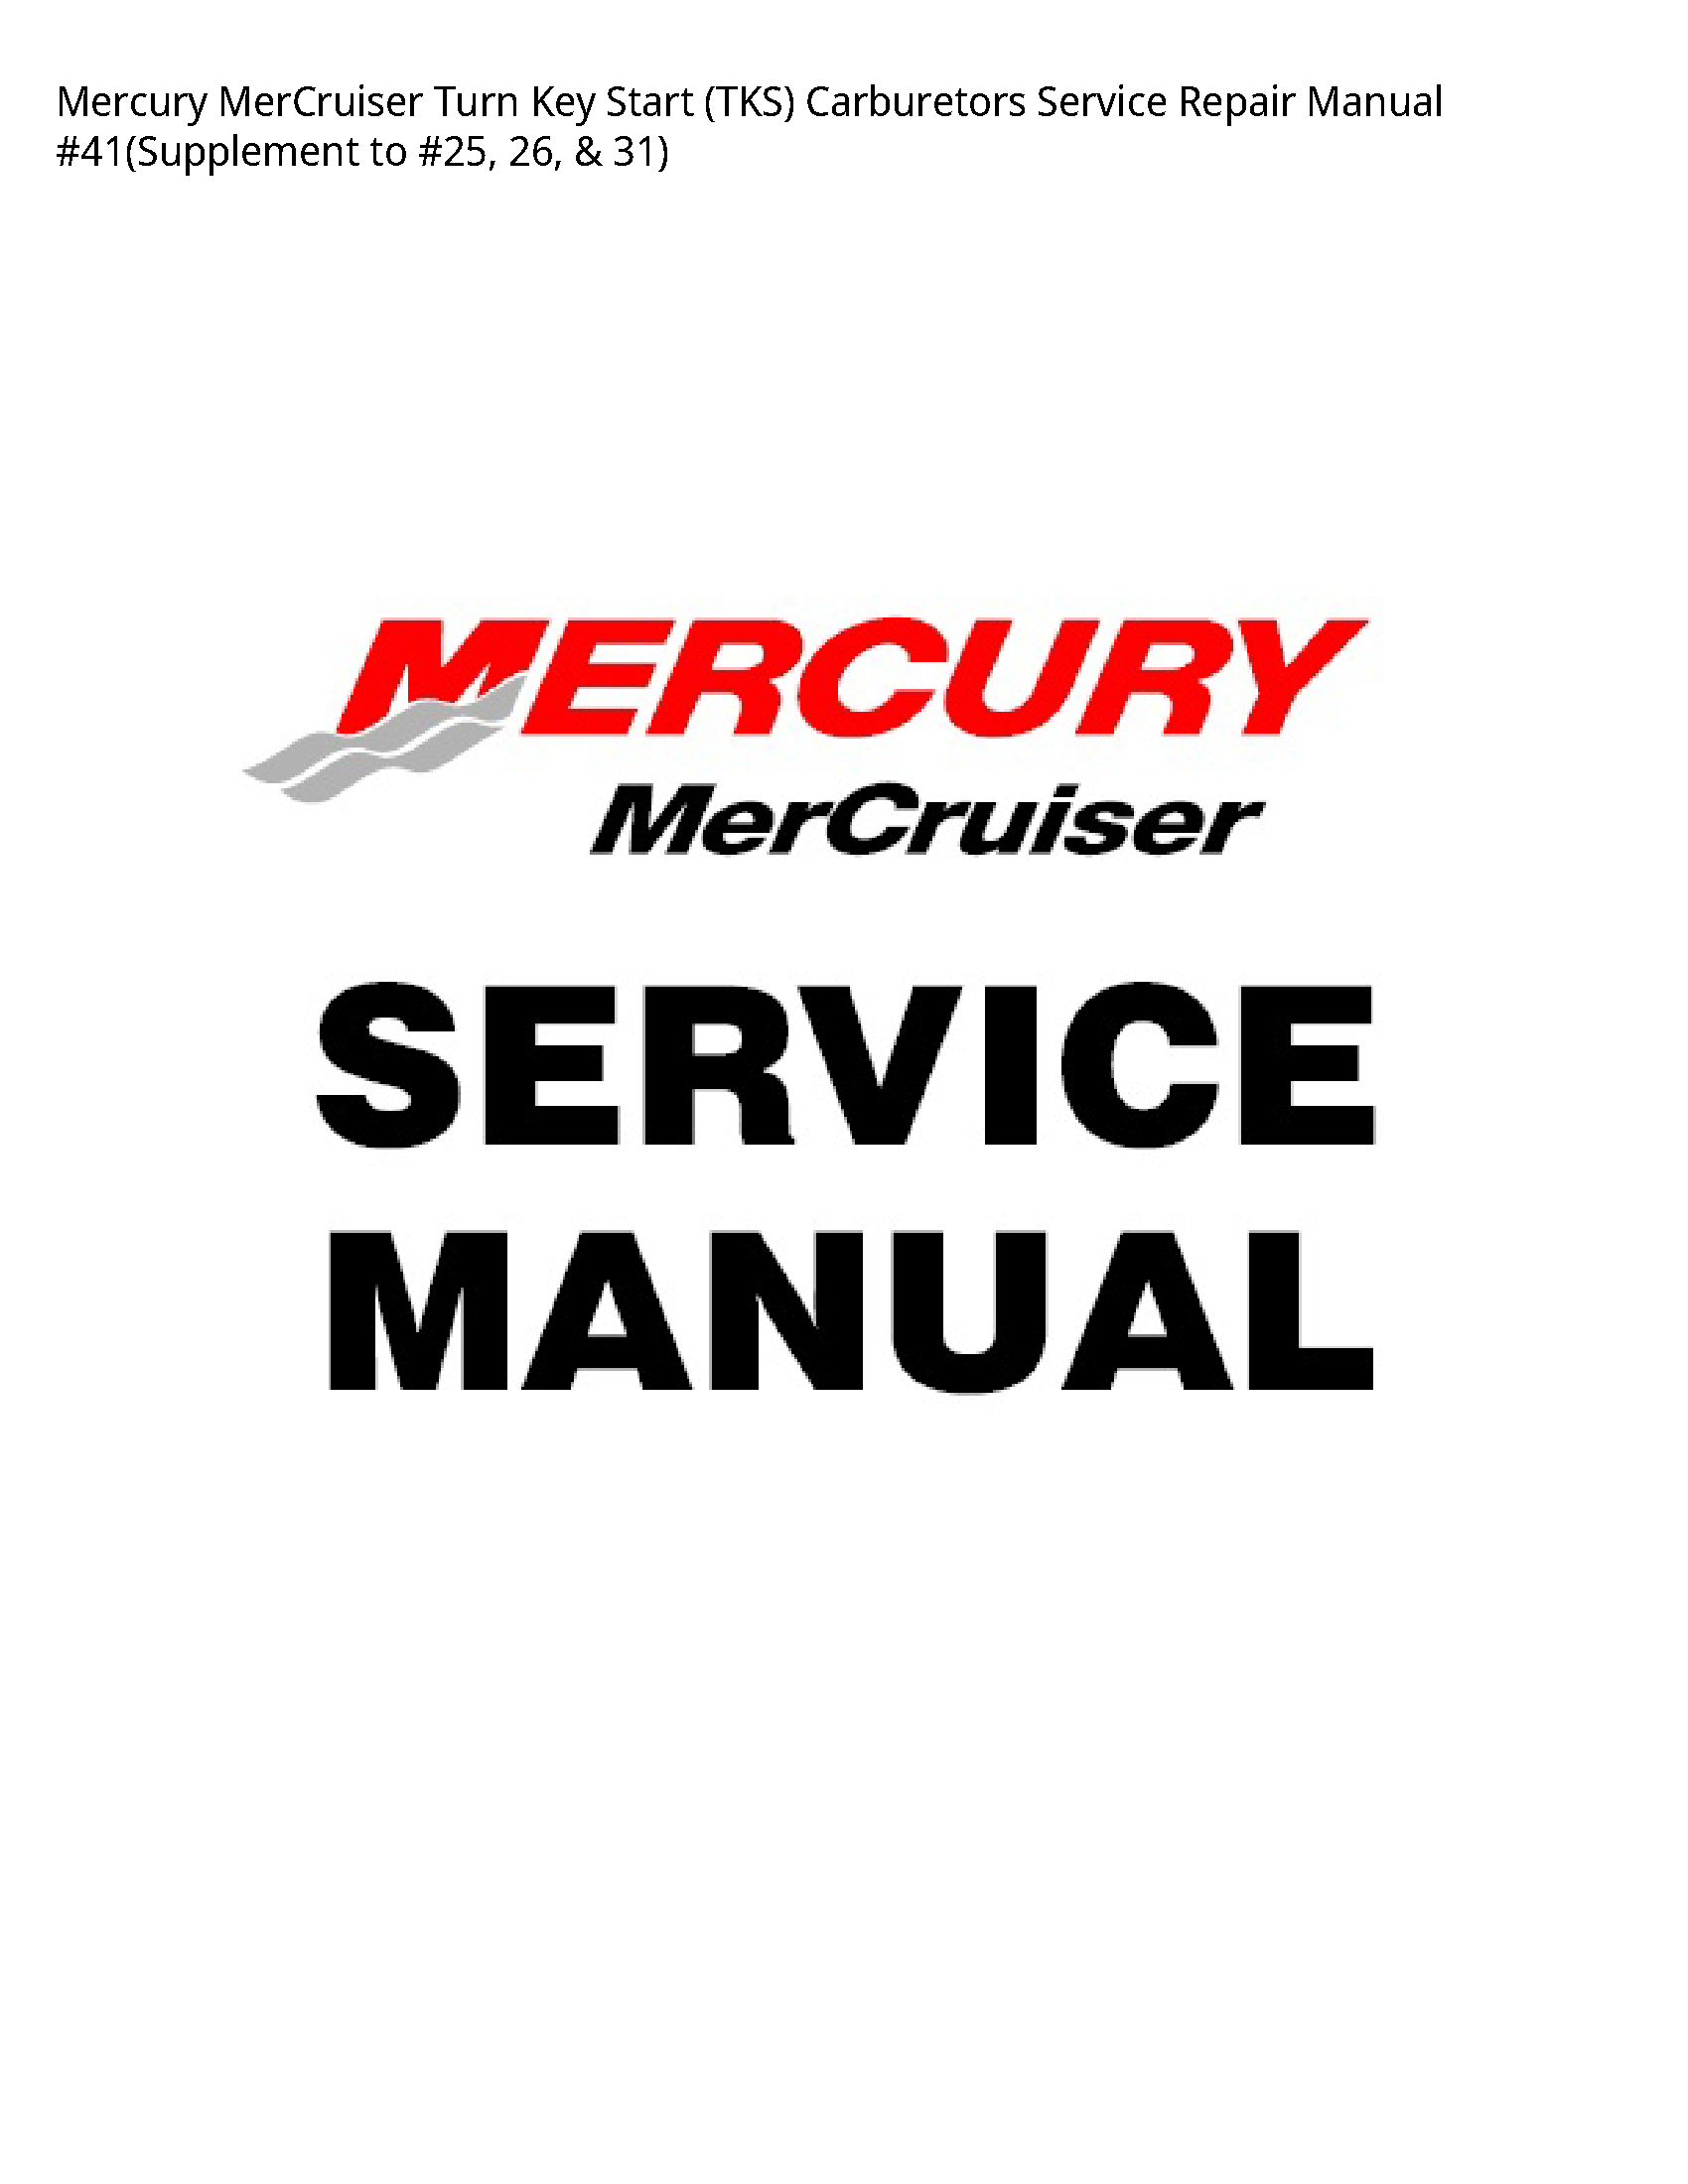 Mercury MerCruiser Turn Key Start (TKS) Carburetors manual